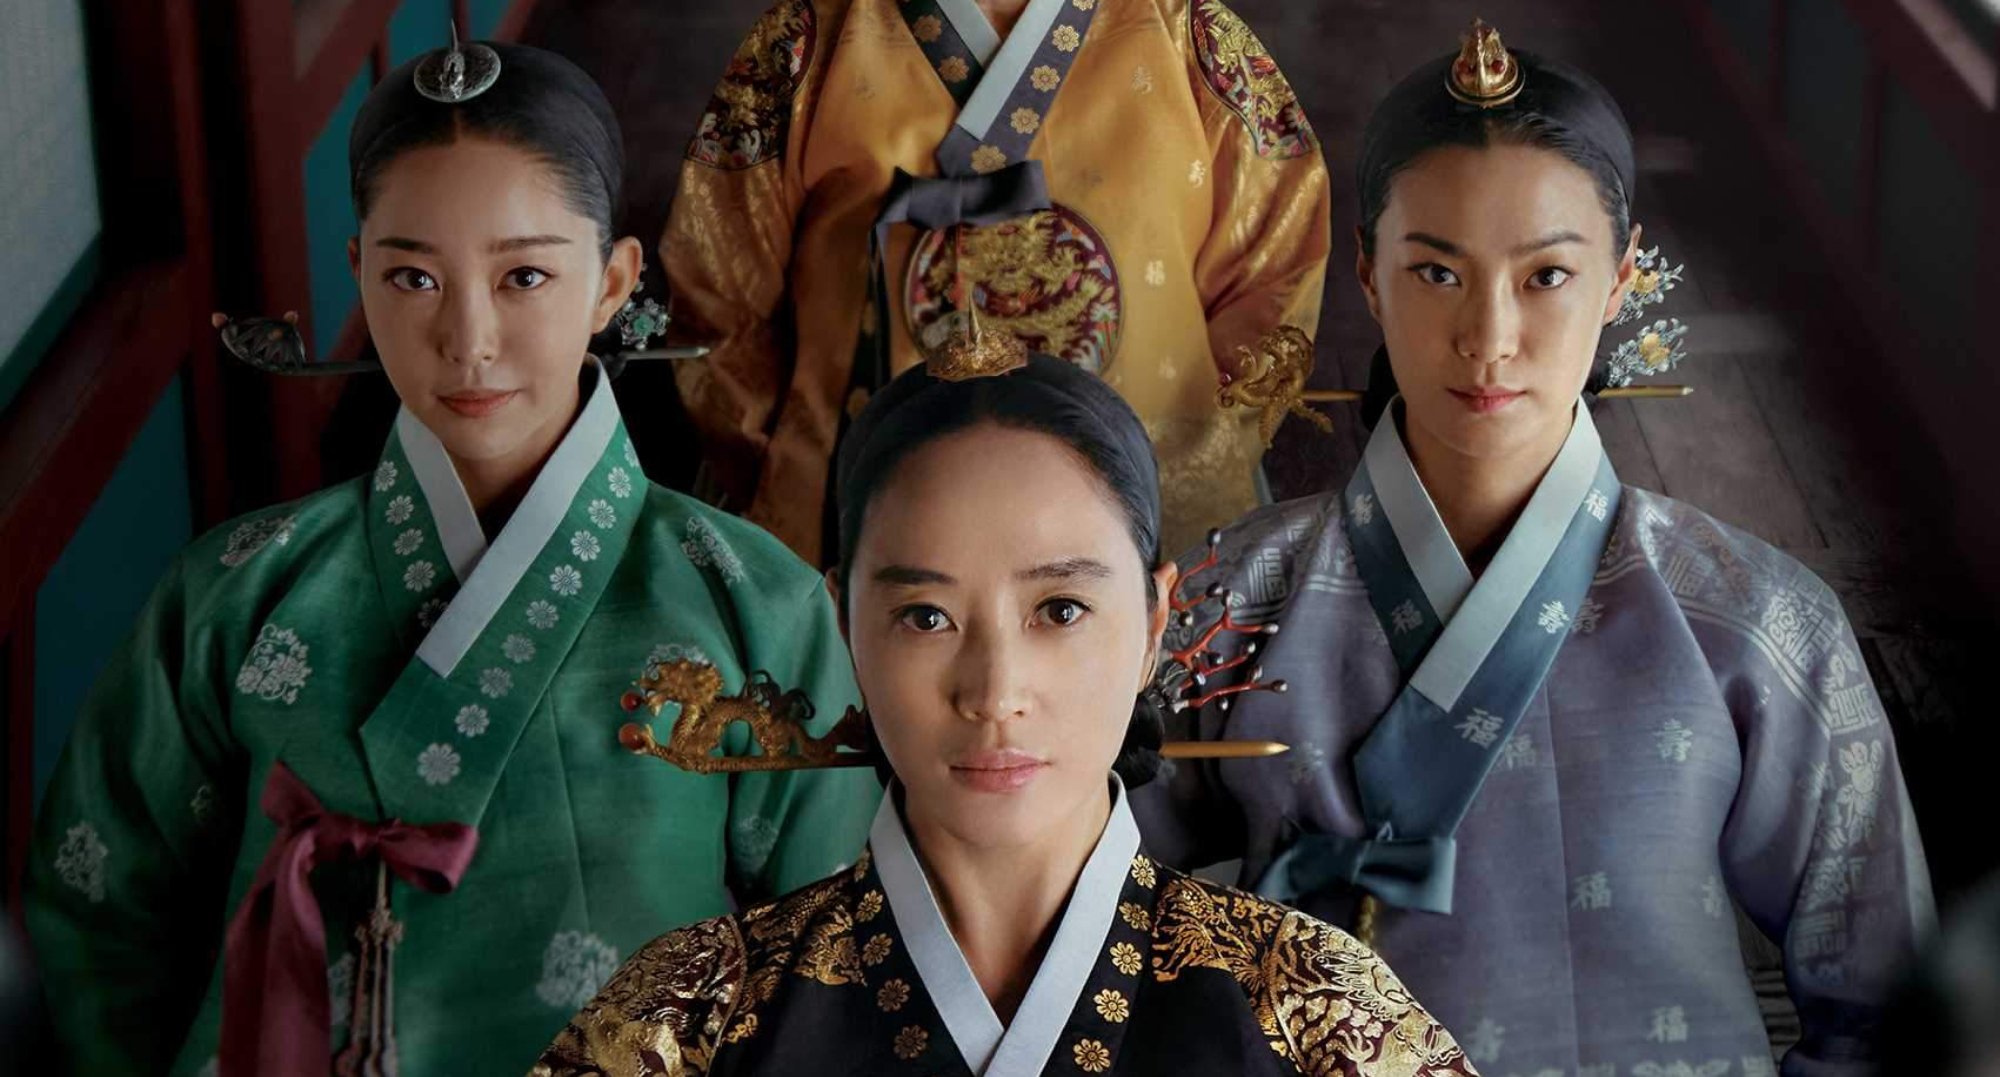 'Under the Queen's Umbrella' cast members Kim Ga-eun, Ok Ja-yeon, and Kim Hye-soo